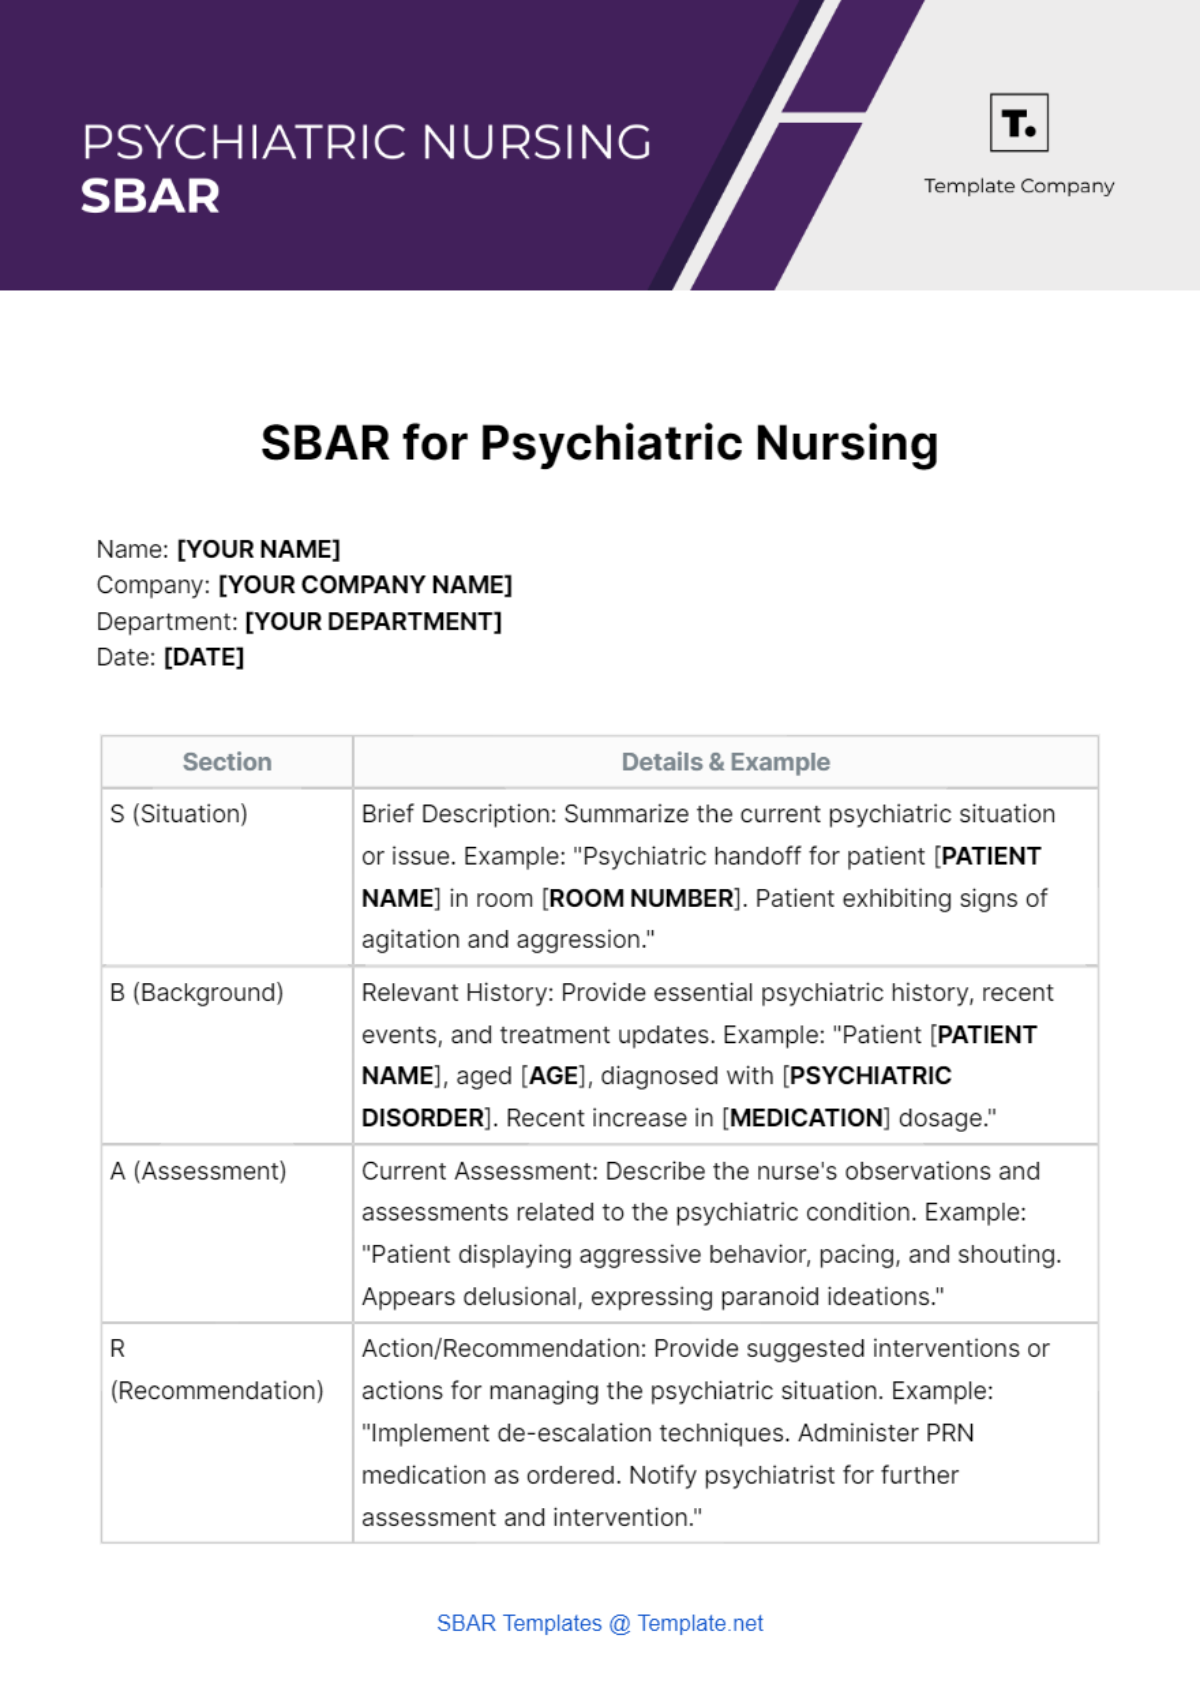 SBAR for Psychiatric Nursing Template